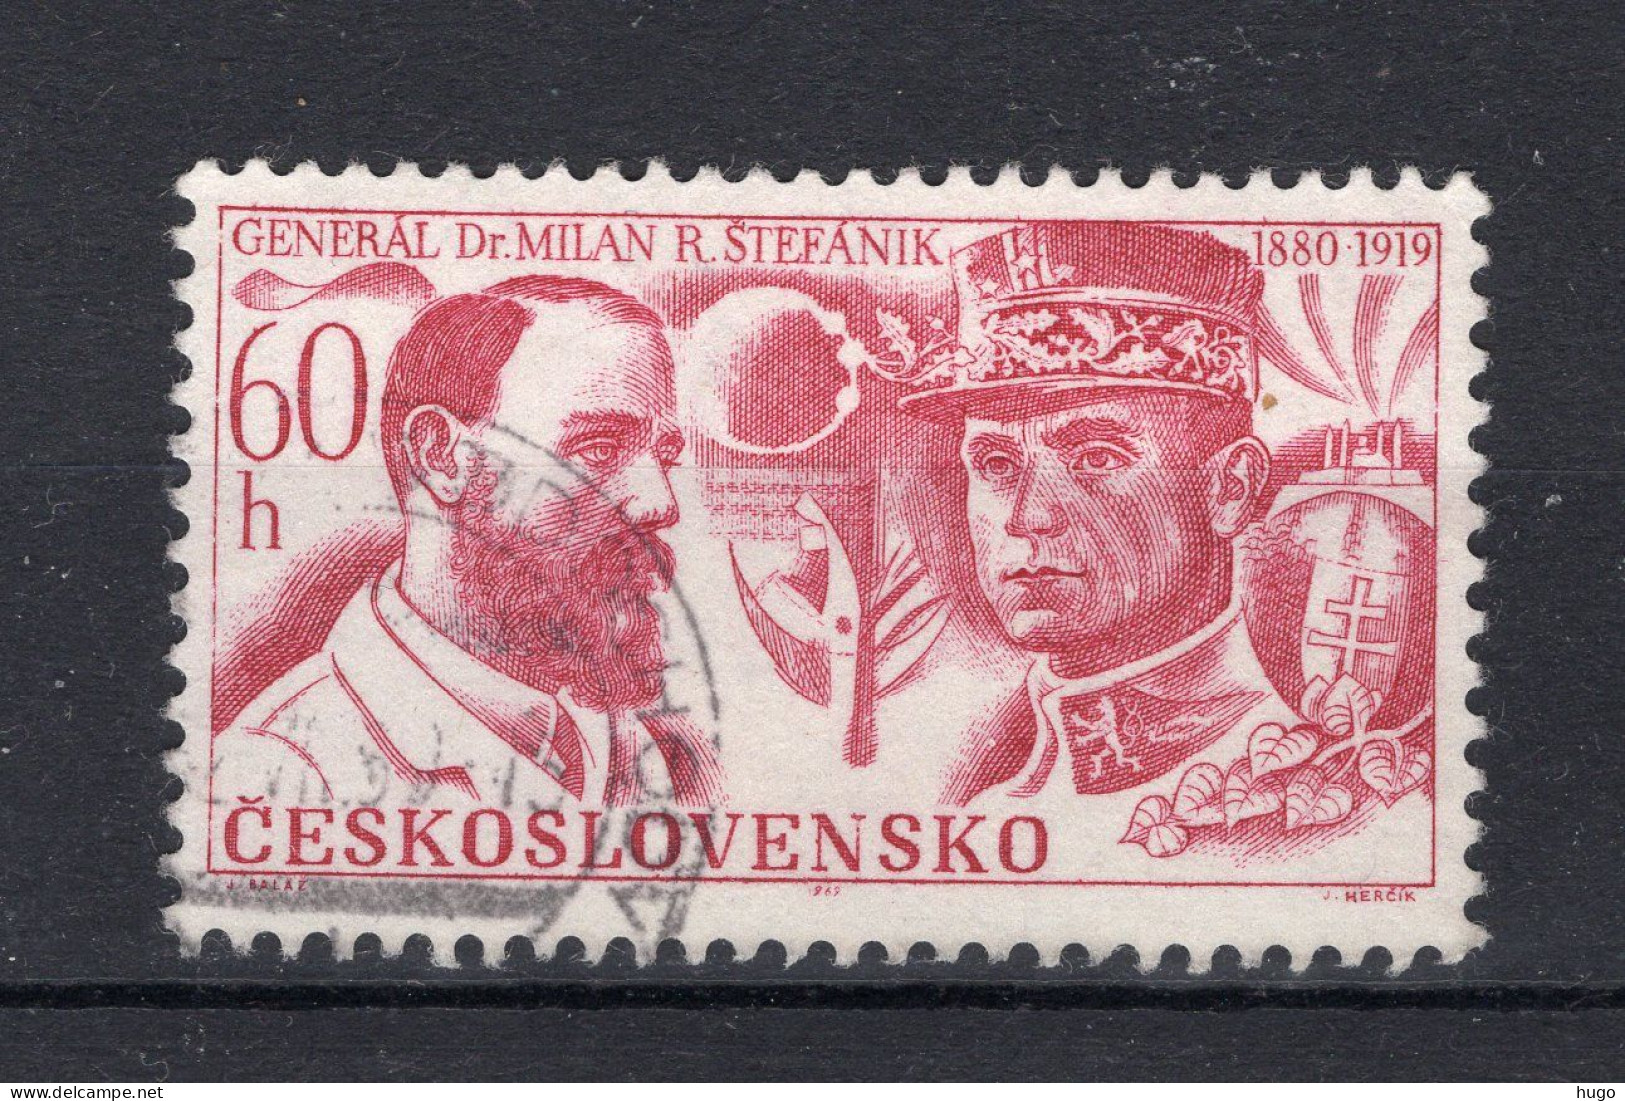 TSJECHOSLOVAKIJE Yt. 1722° Gestempeld 1969 - Used Stamps